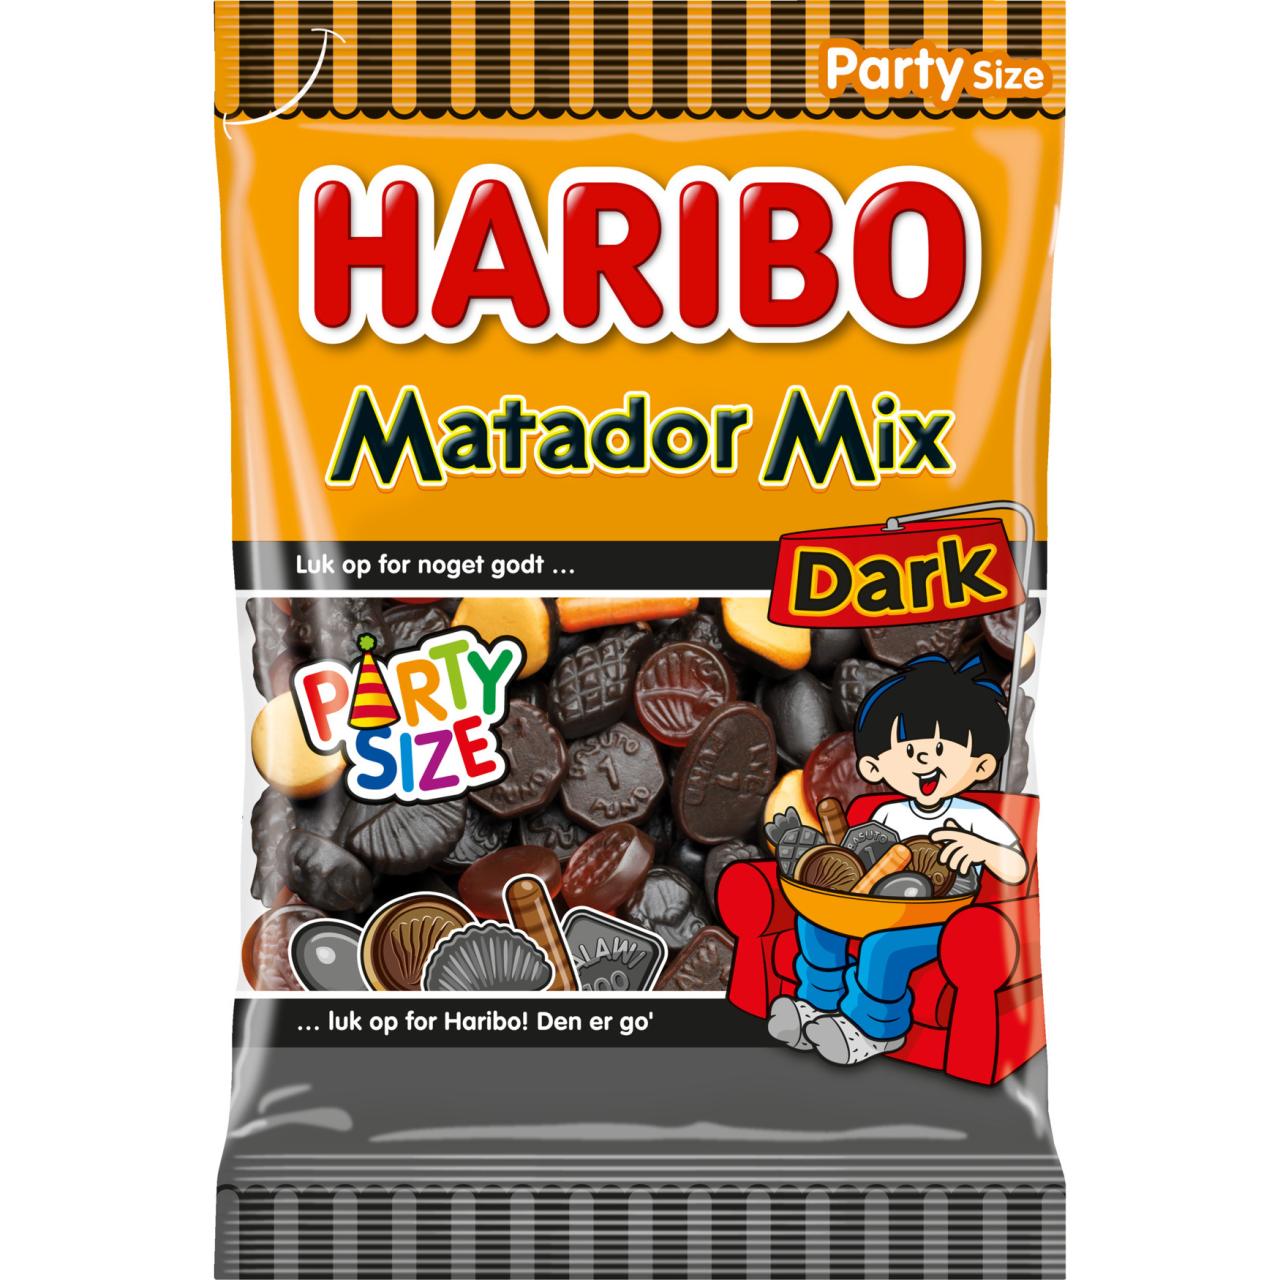 Haribo Matador Mix Dark 470g